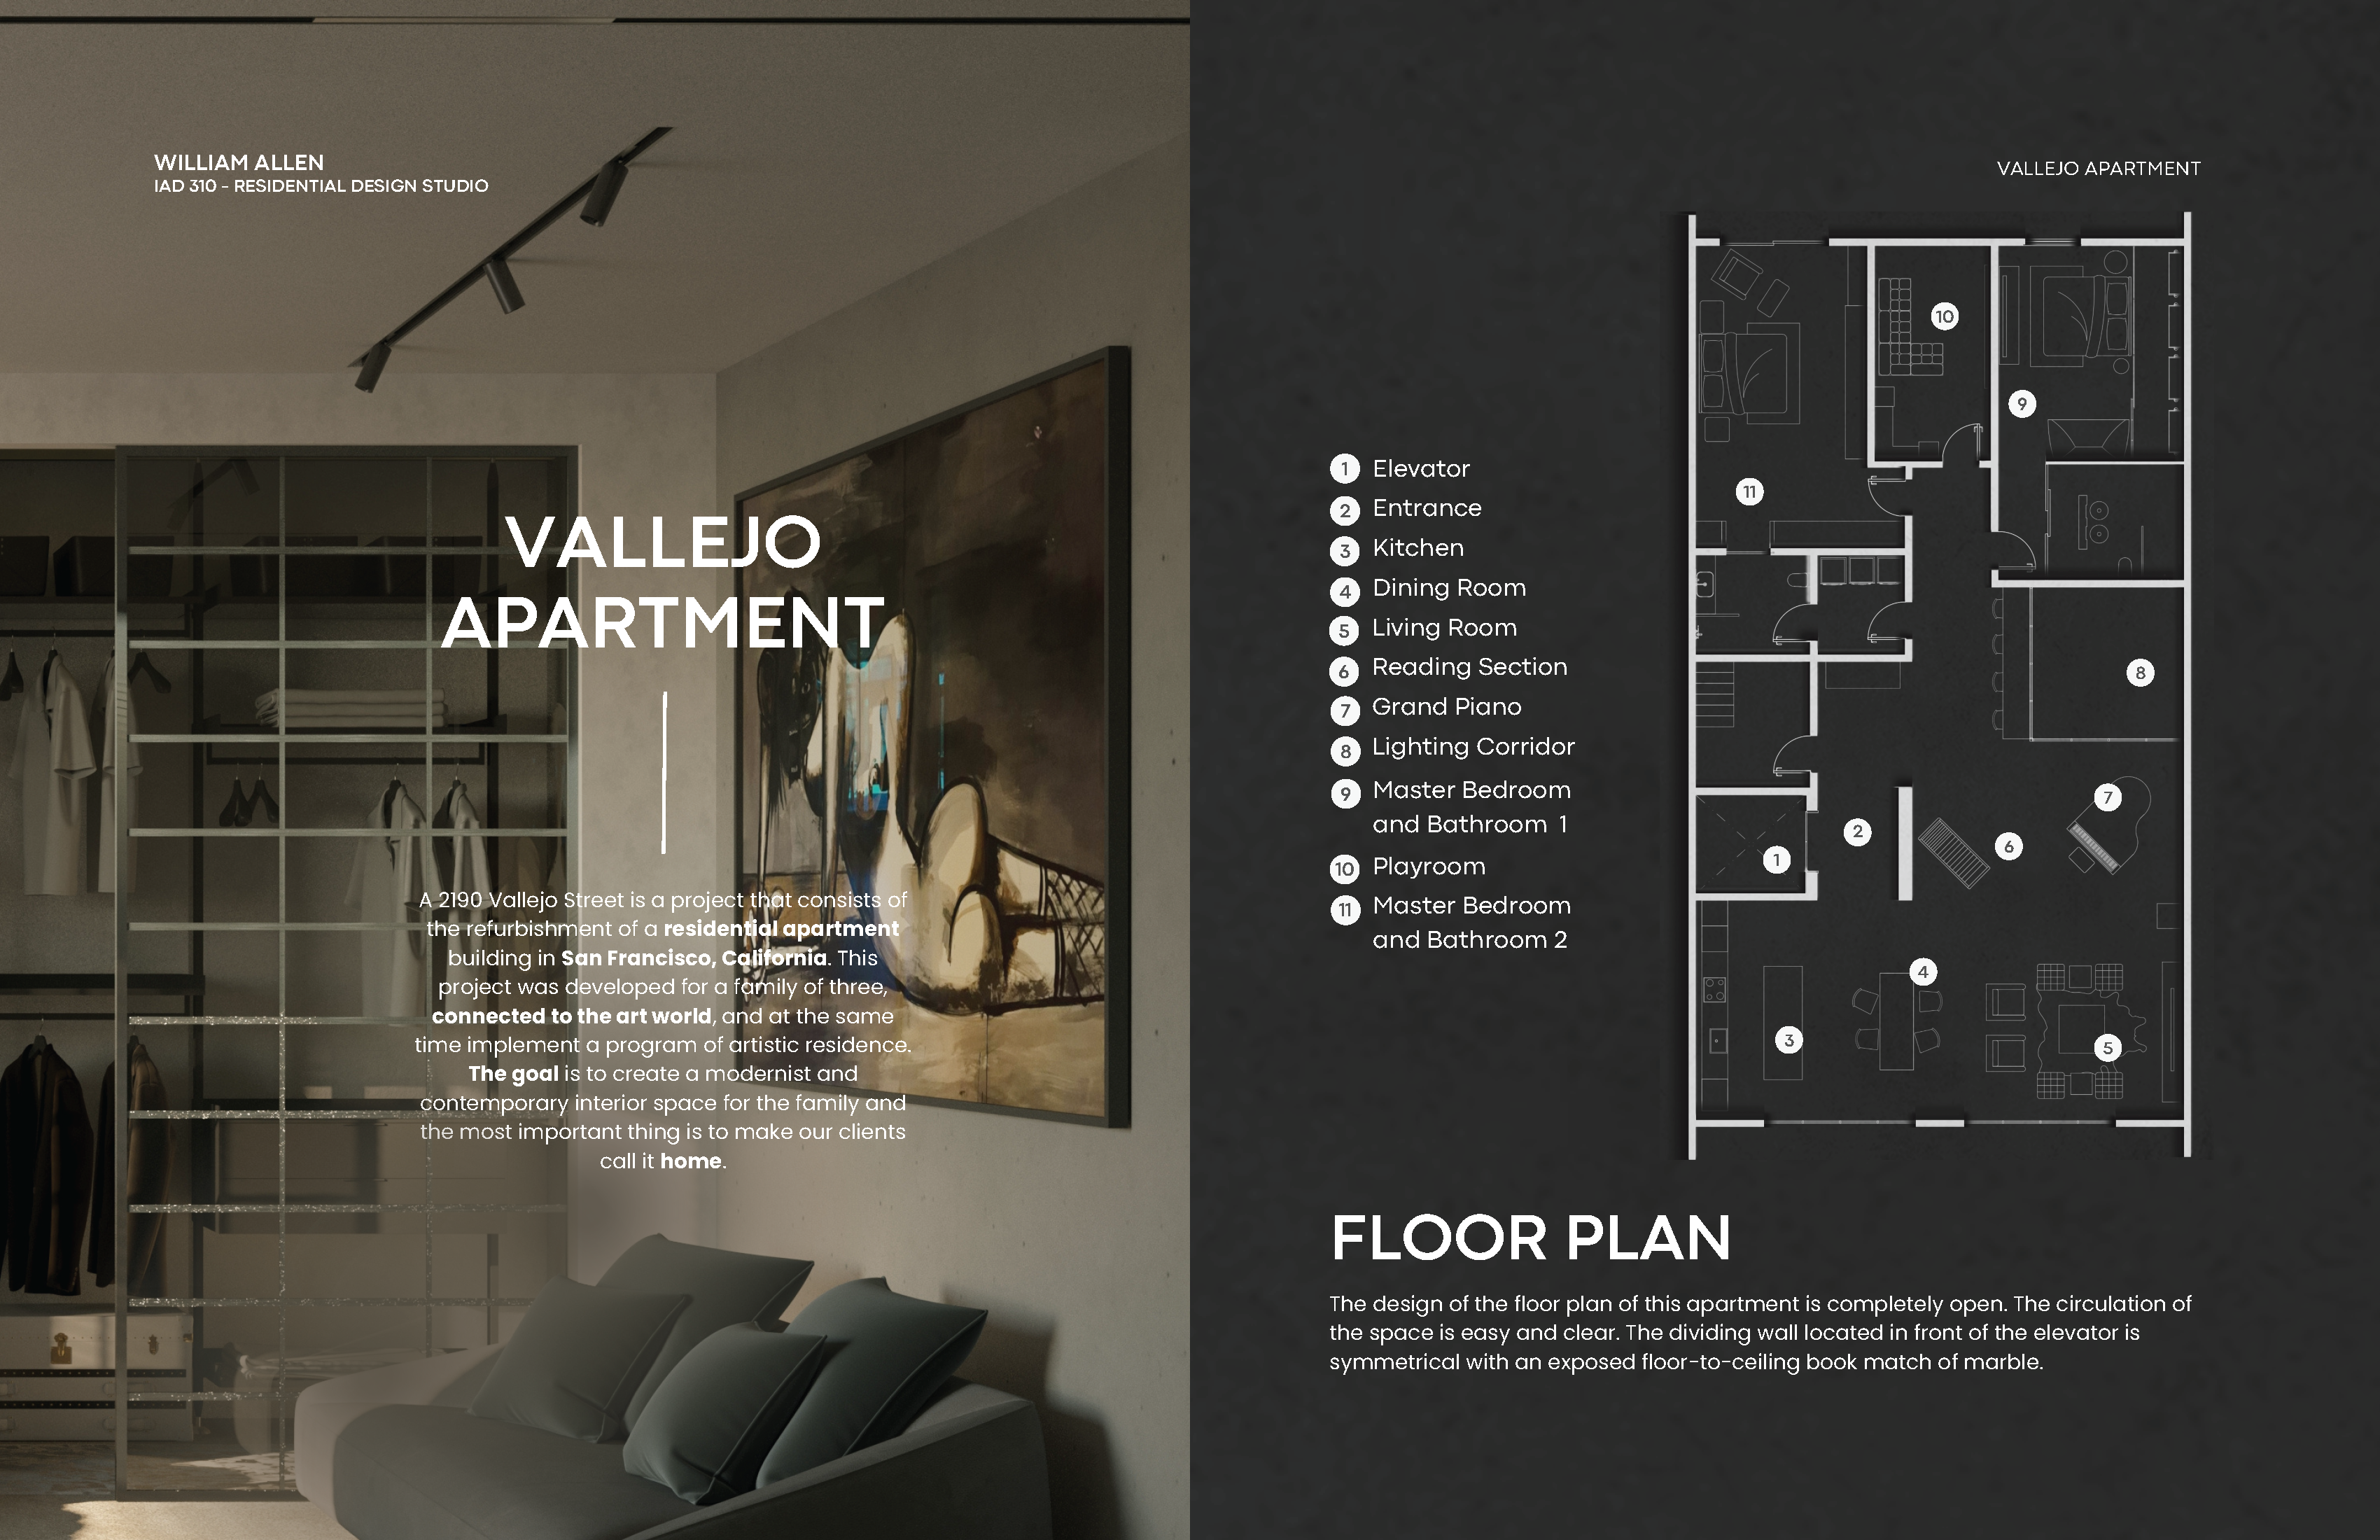 Vallejo Apartment - Floor Plan - William Allen